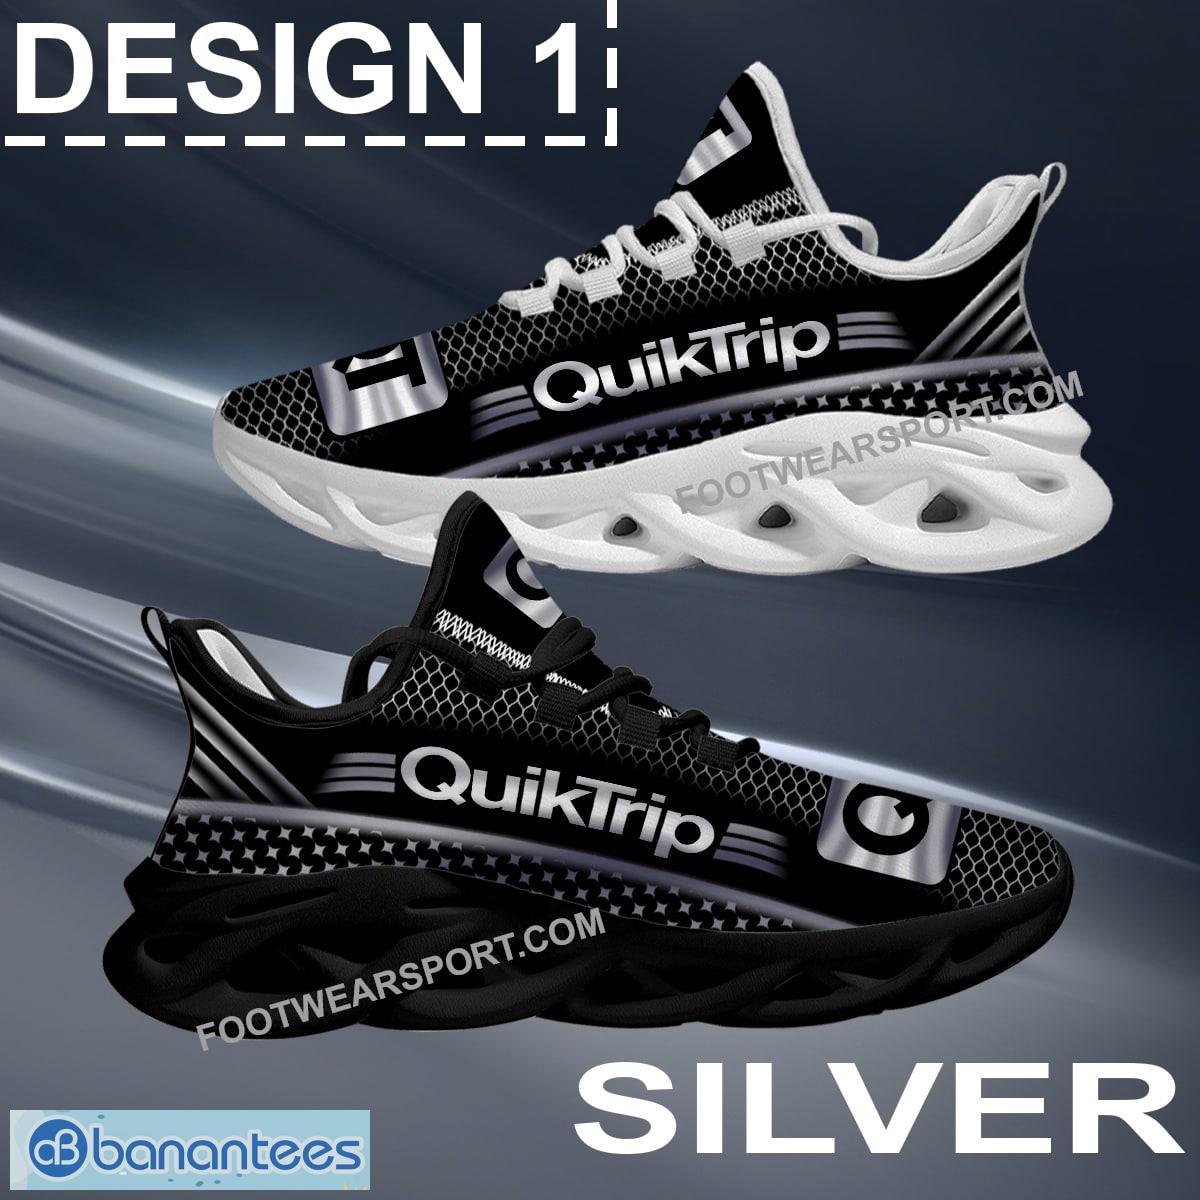 Quiktrip Max Soul Shoes Gold, Diamond, Silver All Over Print Branding Running Sneaker Gift - Brand Quiktrip Max Soul Shoes Style 1